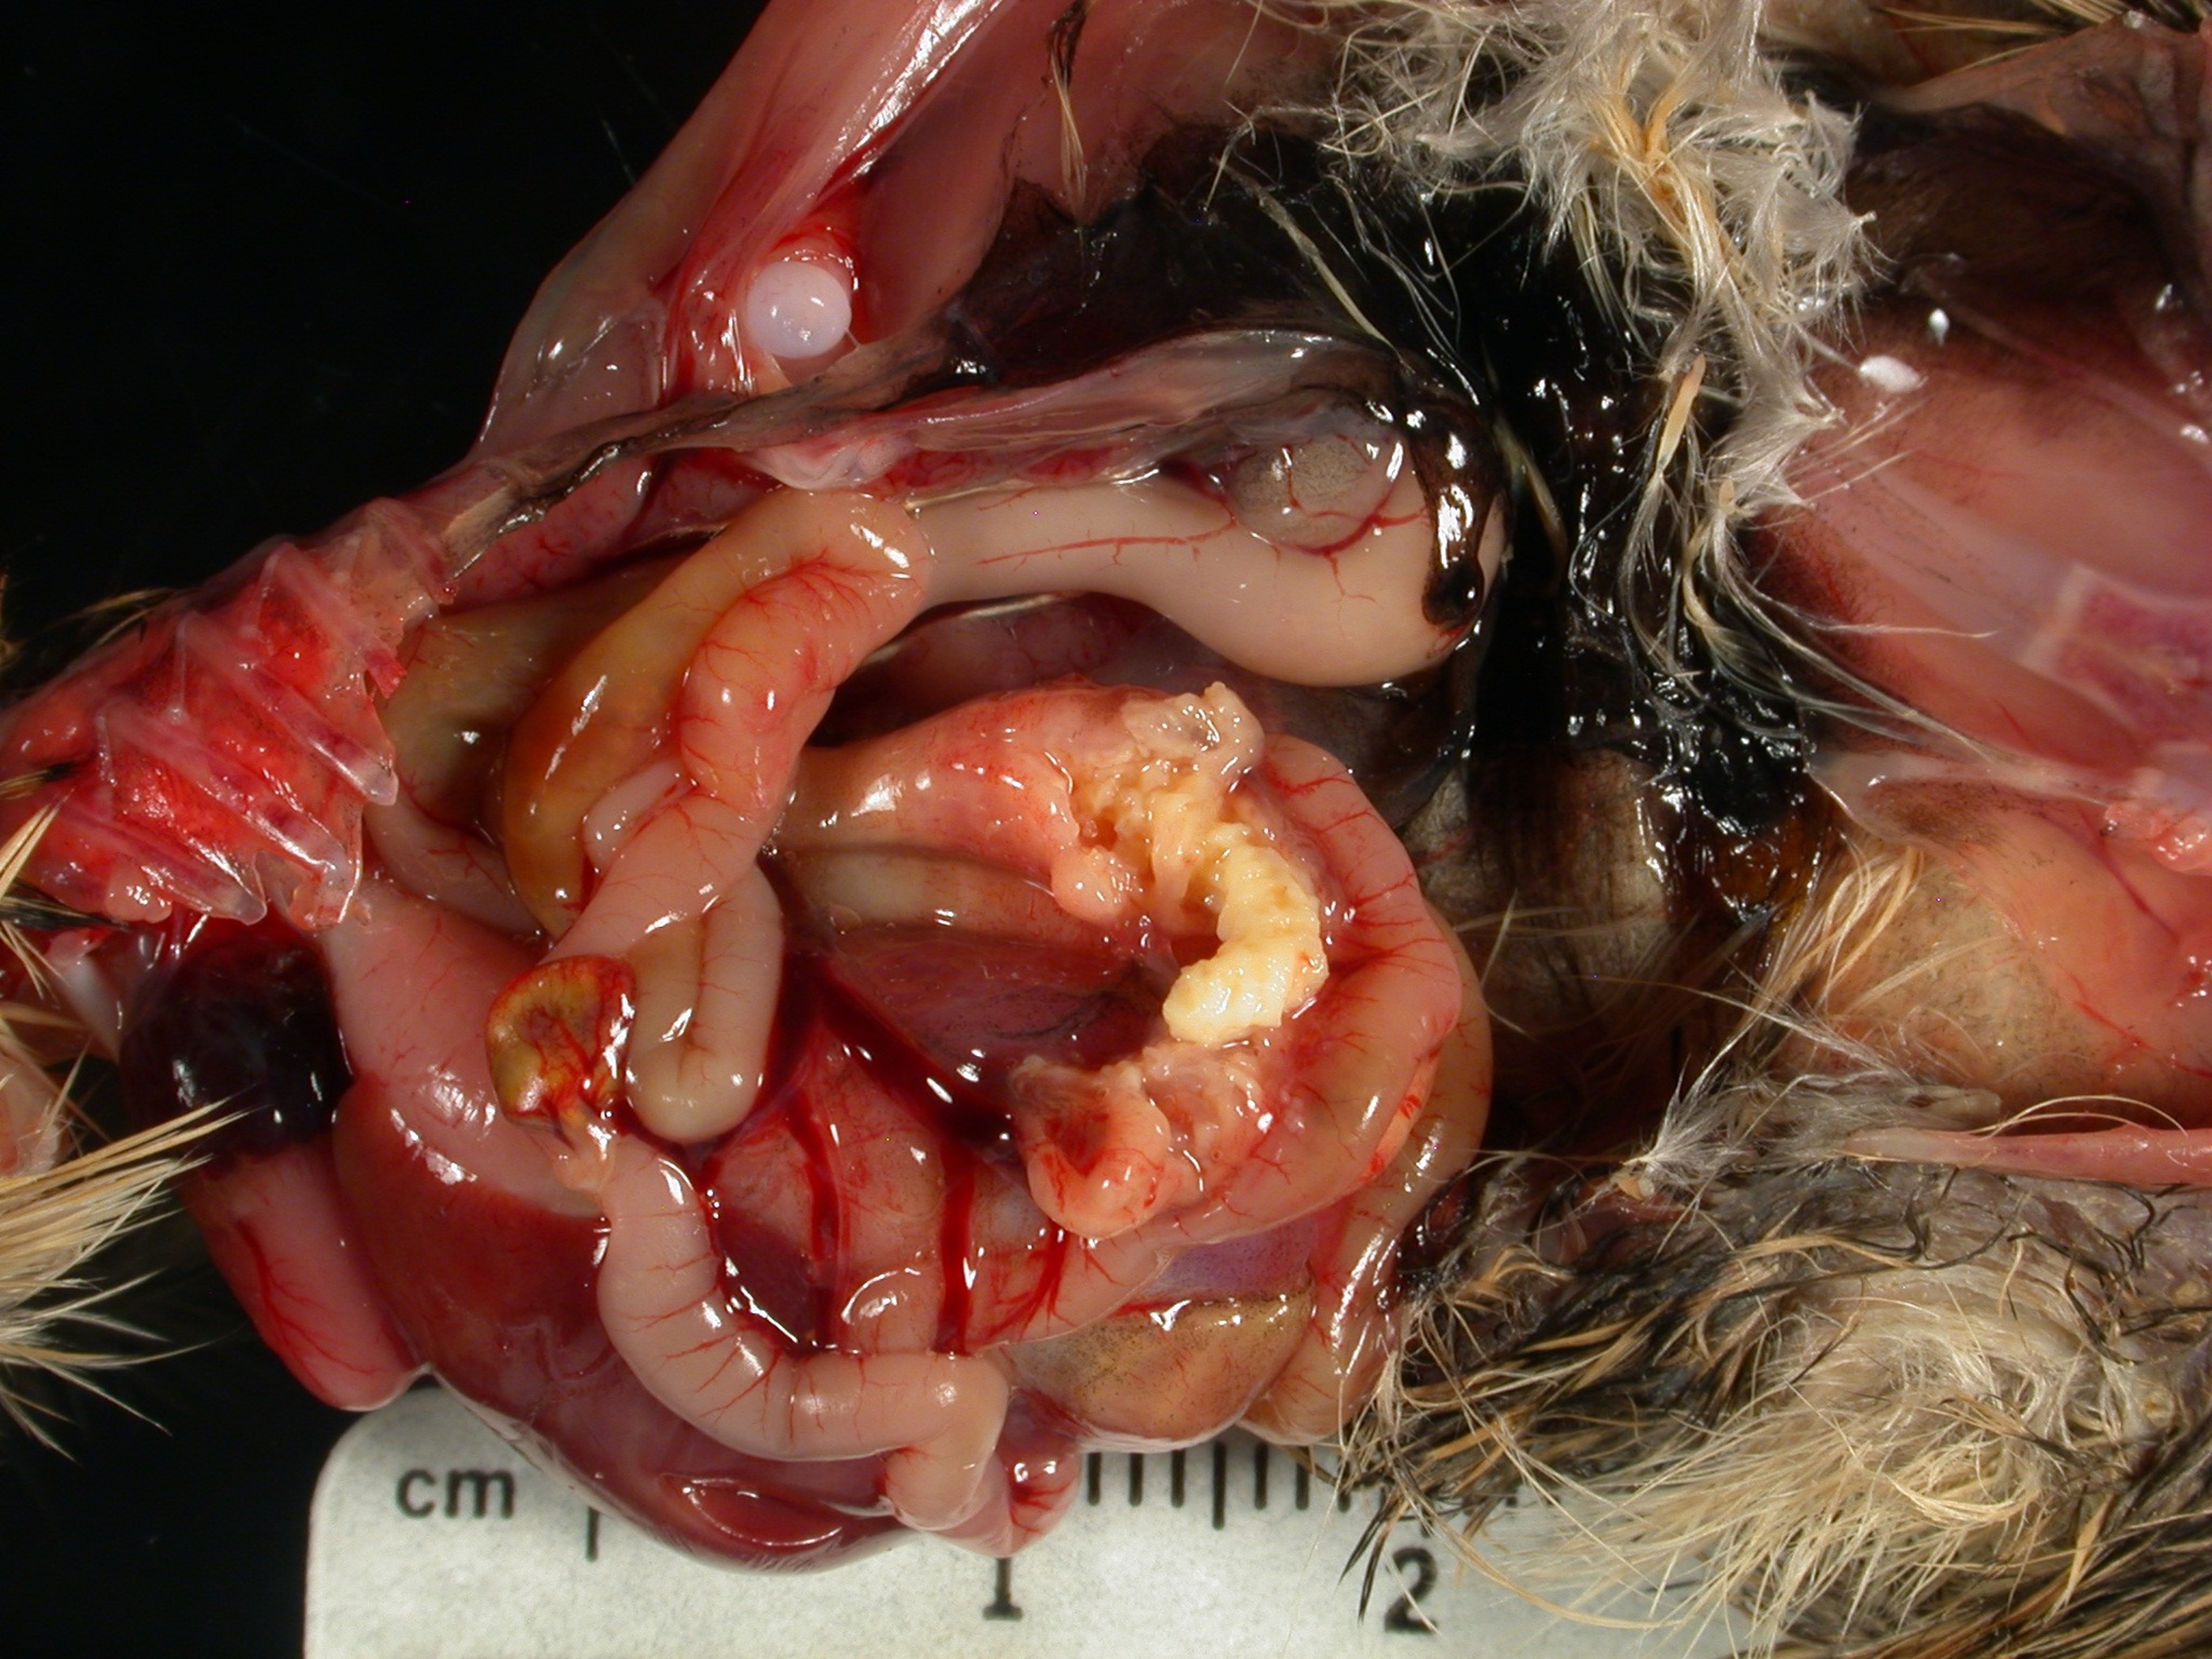 Paratyphoid infection, cecal core, partridge